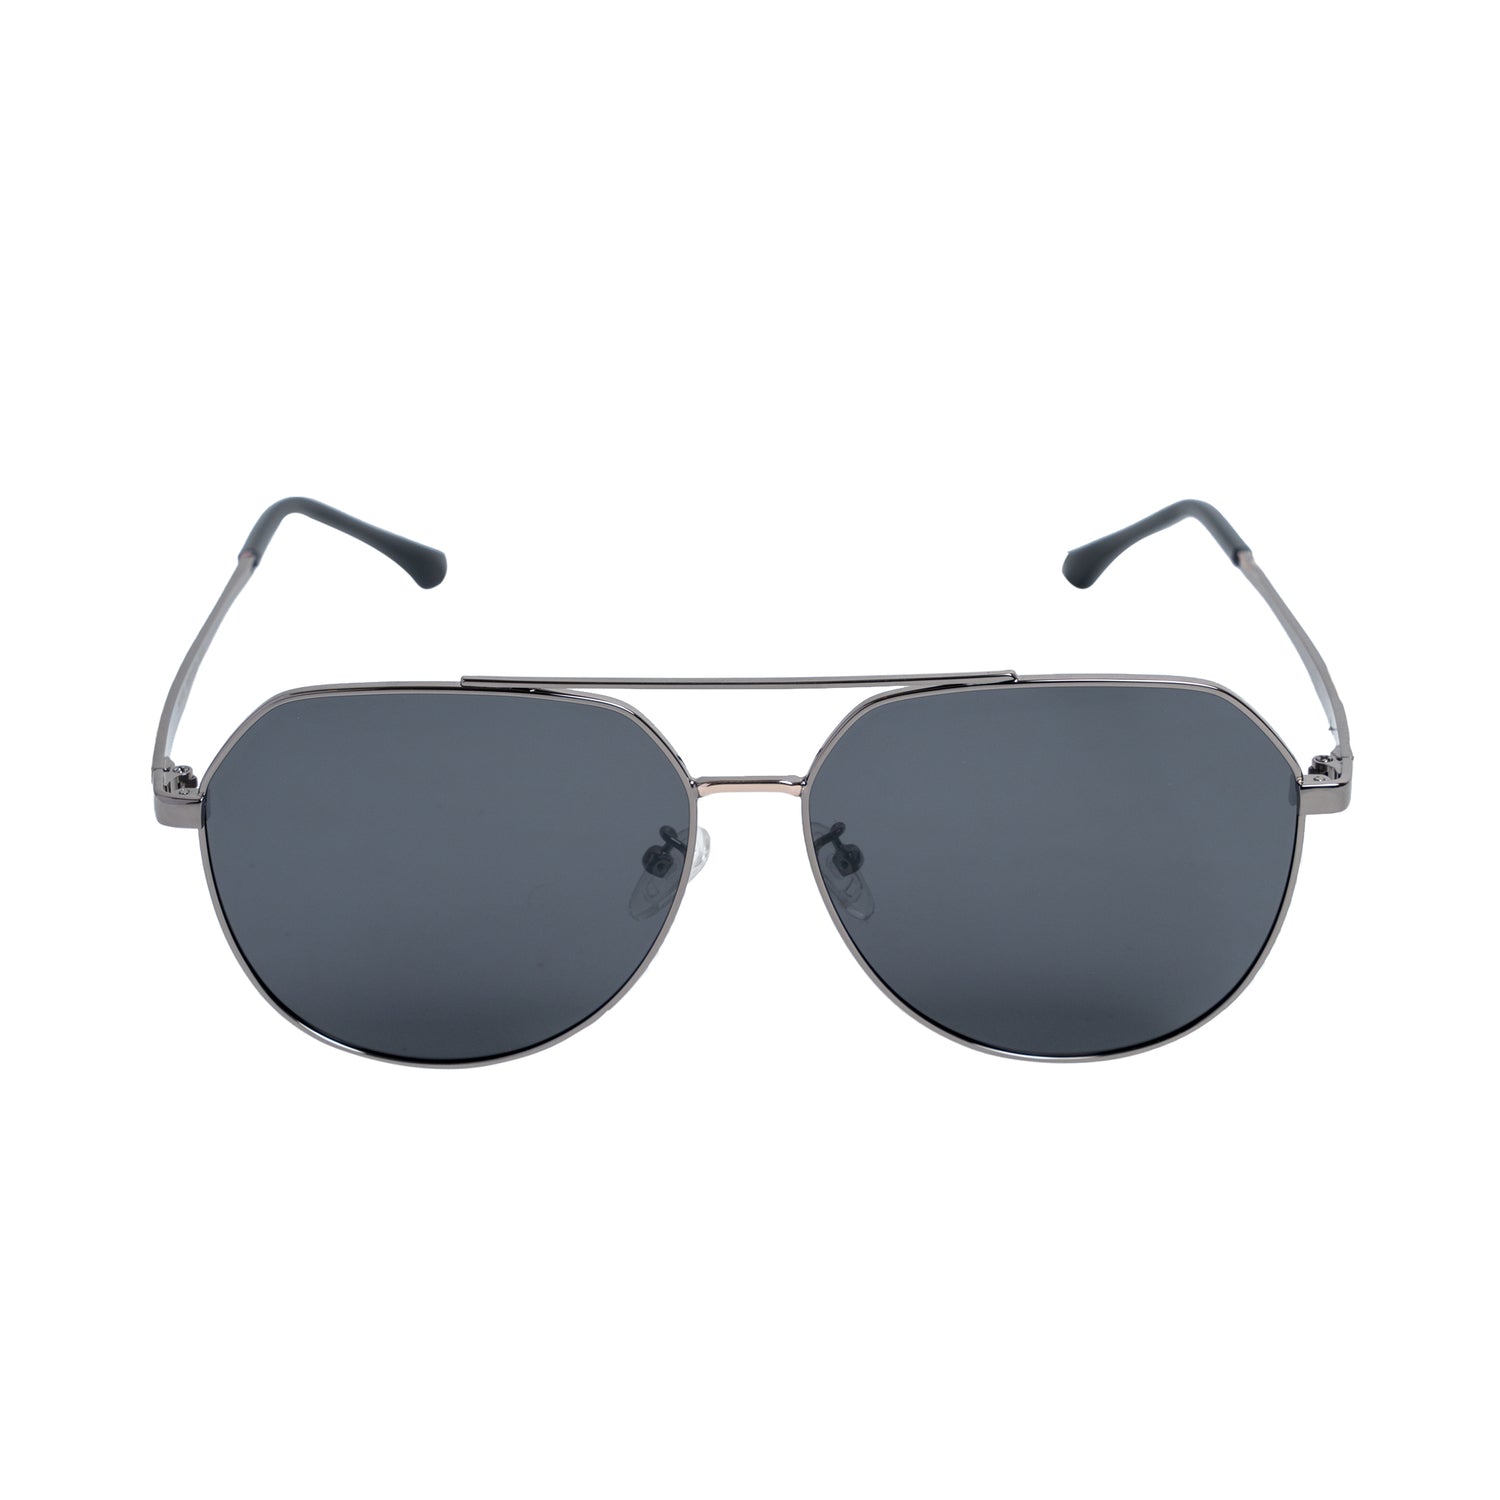 Chokore Classic Aviator Sunglasses (Black & Silver)